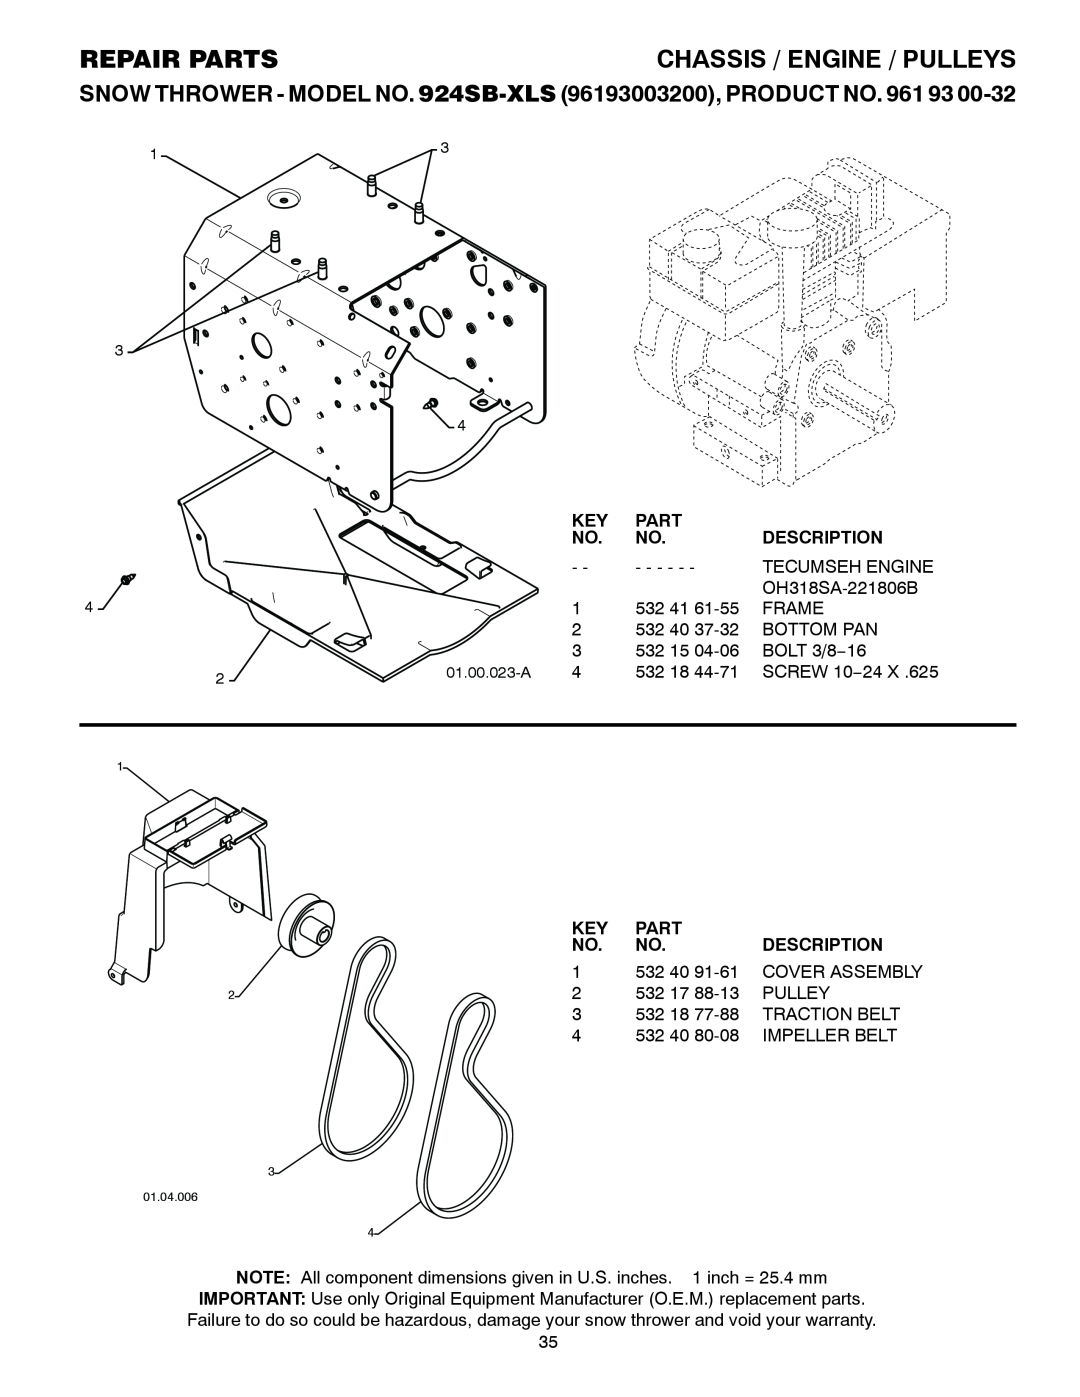 Husqvarna 924SB-XLS owner manual Repair Partschassis / Engine / Pulleys, Description 